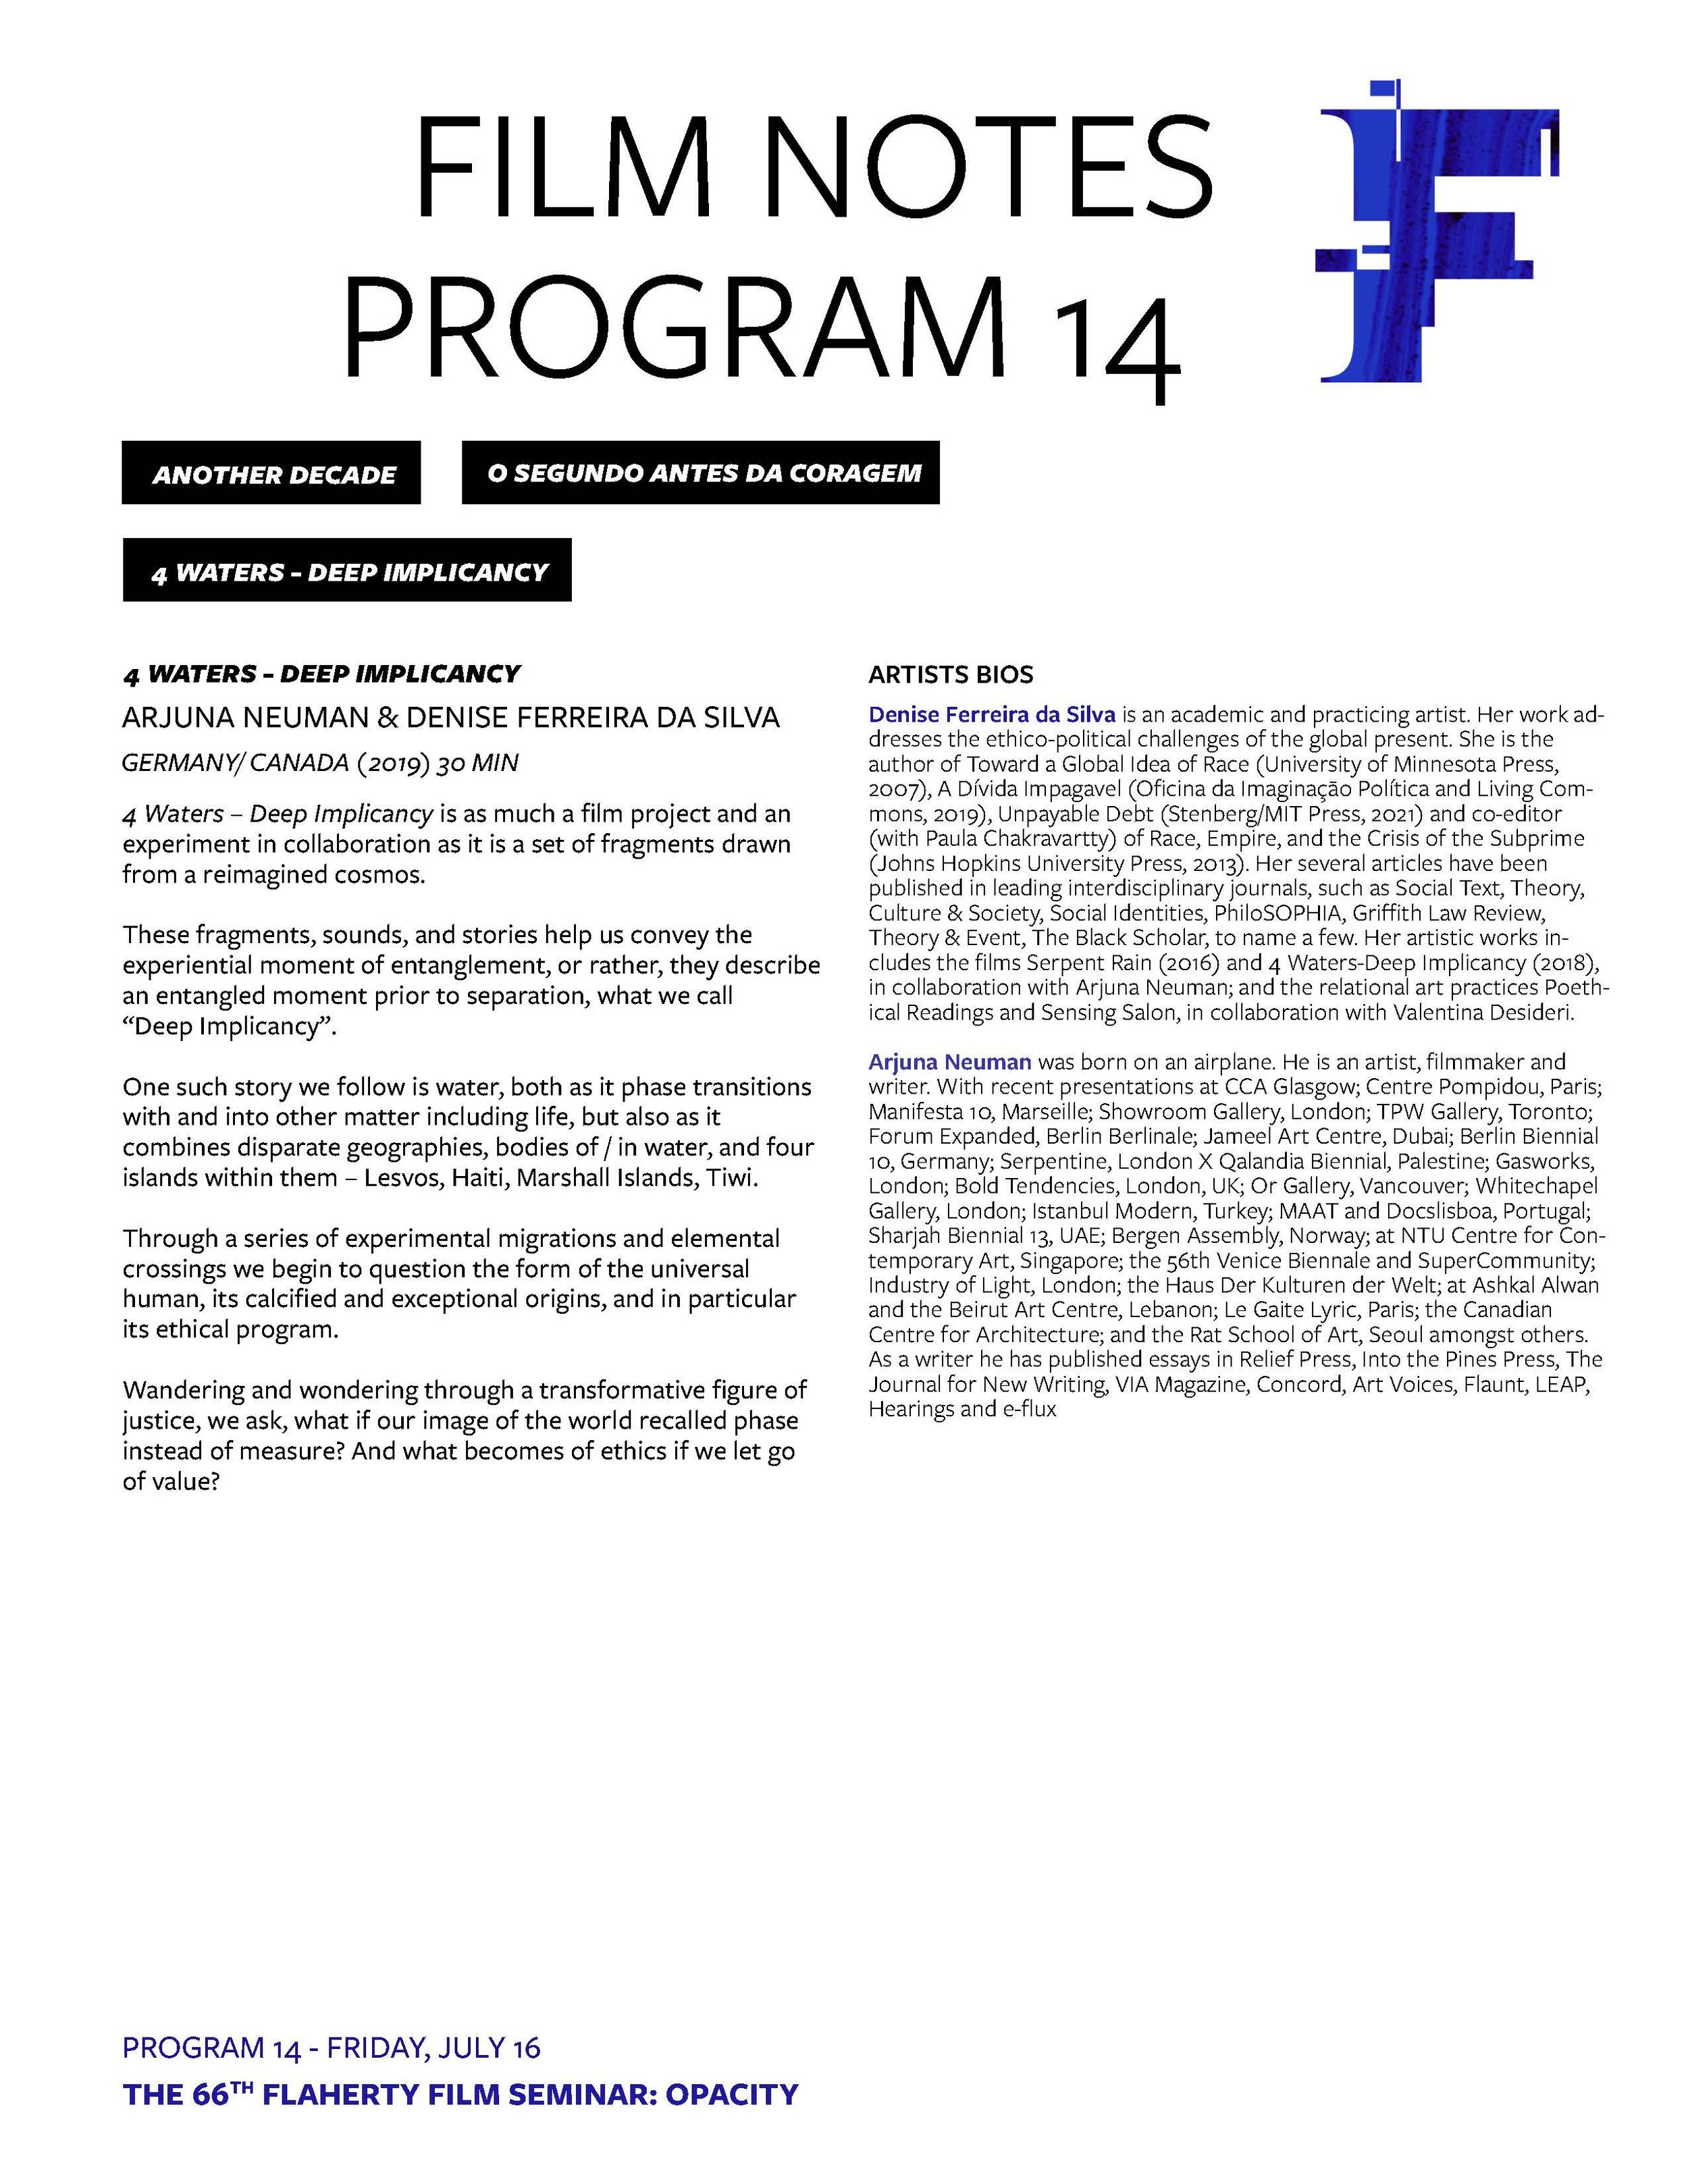 Program 14 Film Notes_Page_2.jpg